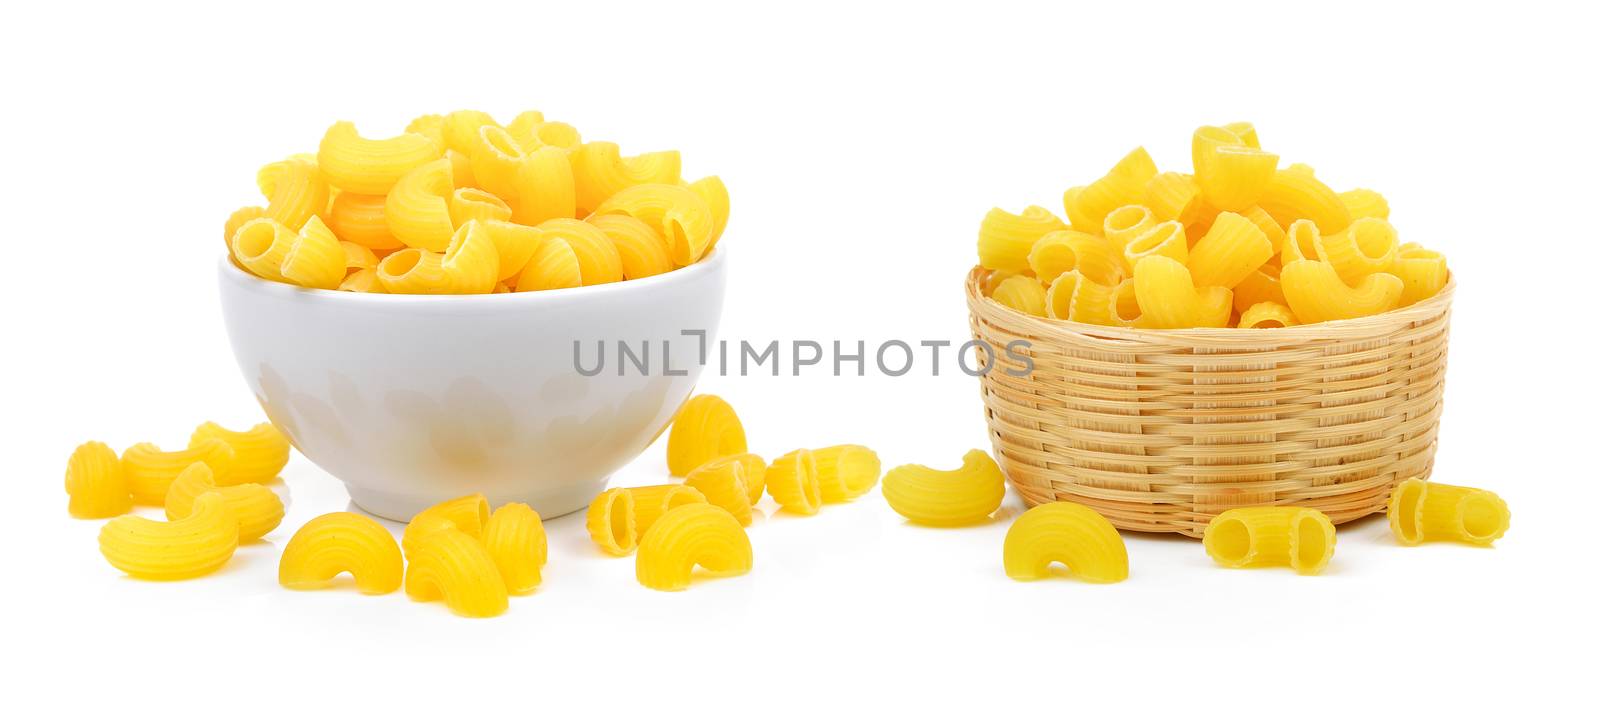 dry macaroni on white background